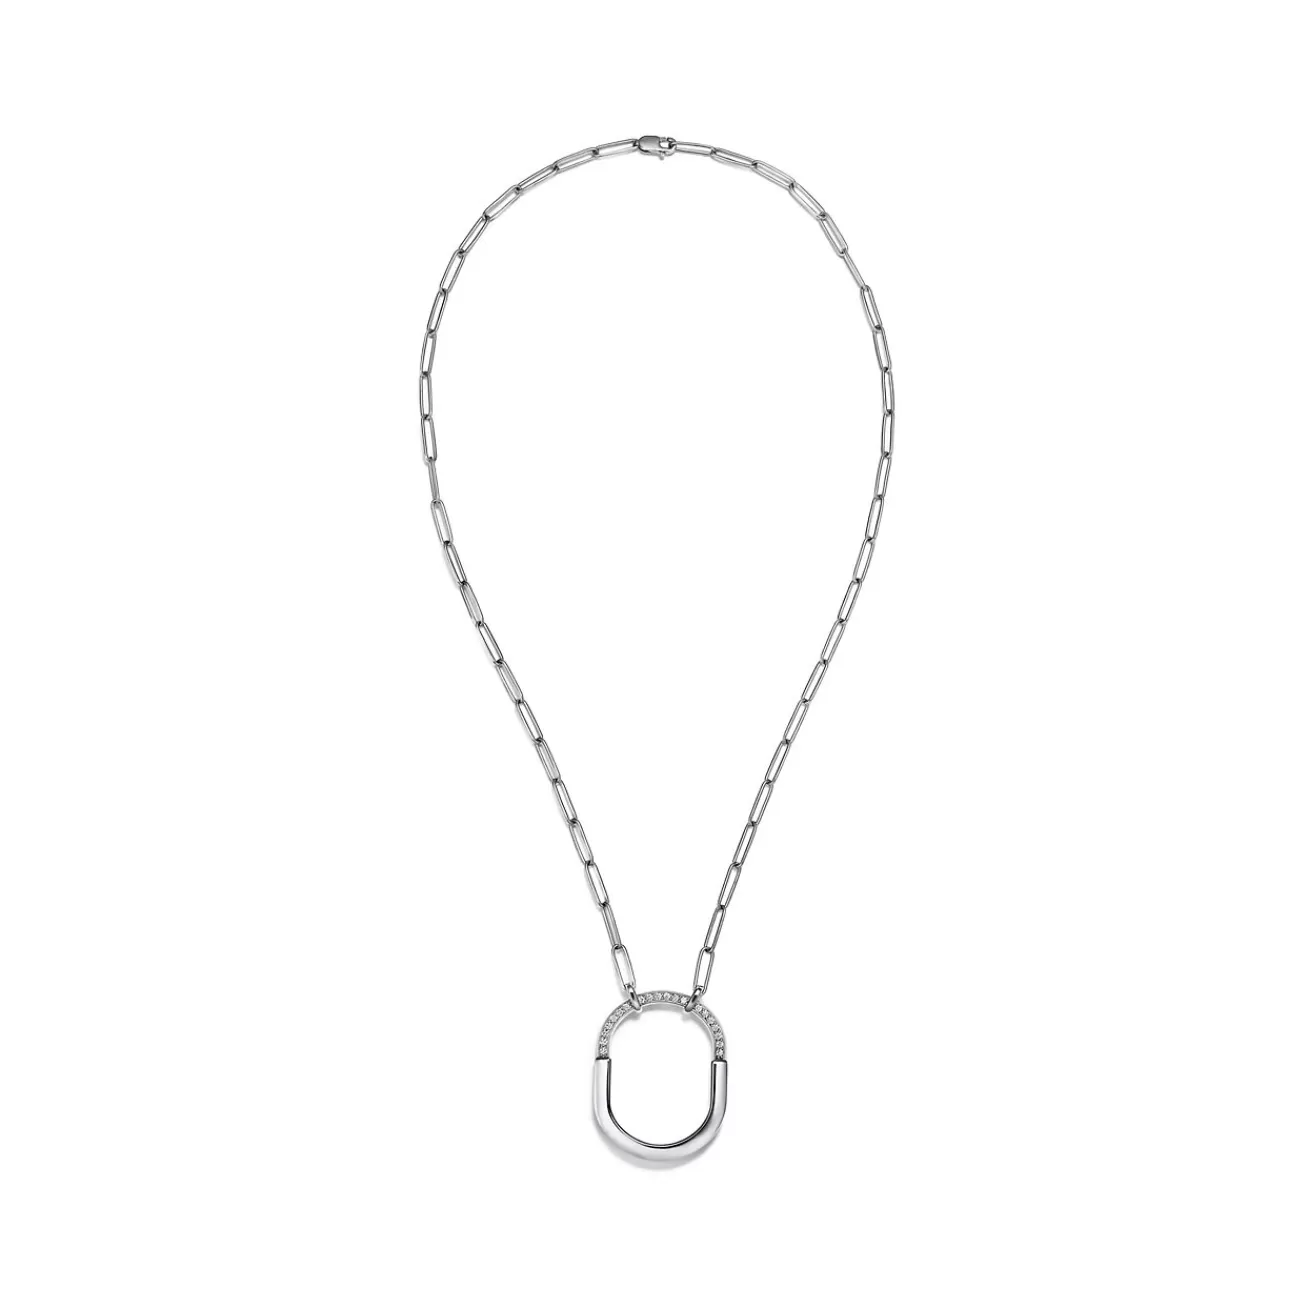 Tiffany & Co. Tiffany Lock Pendant in White Gold with Diamonds, Large | ^ Necklaces & Pendants | Diamond Jewelry